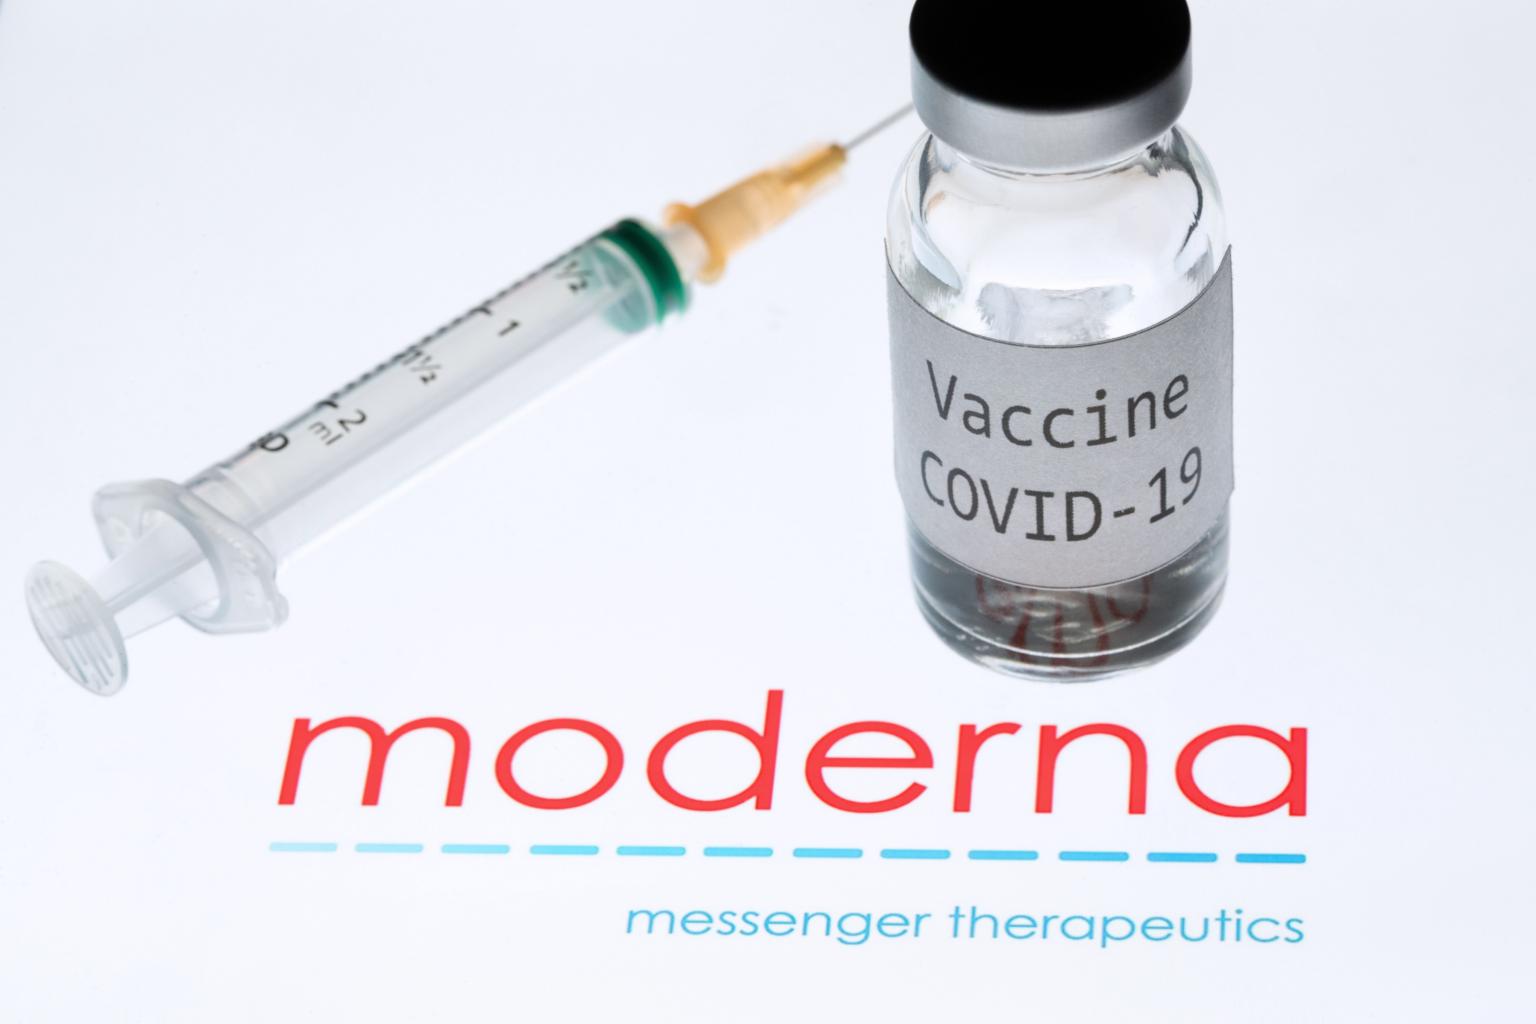 US authorises Moderna Covid-19 vaccine, elderly next in line for shots